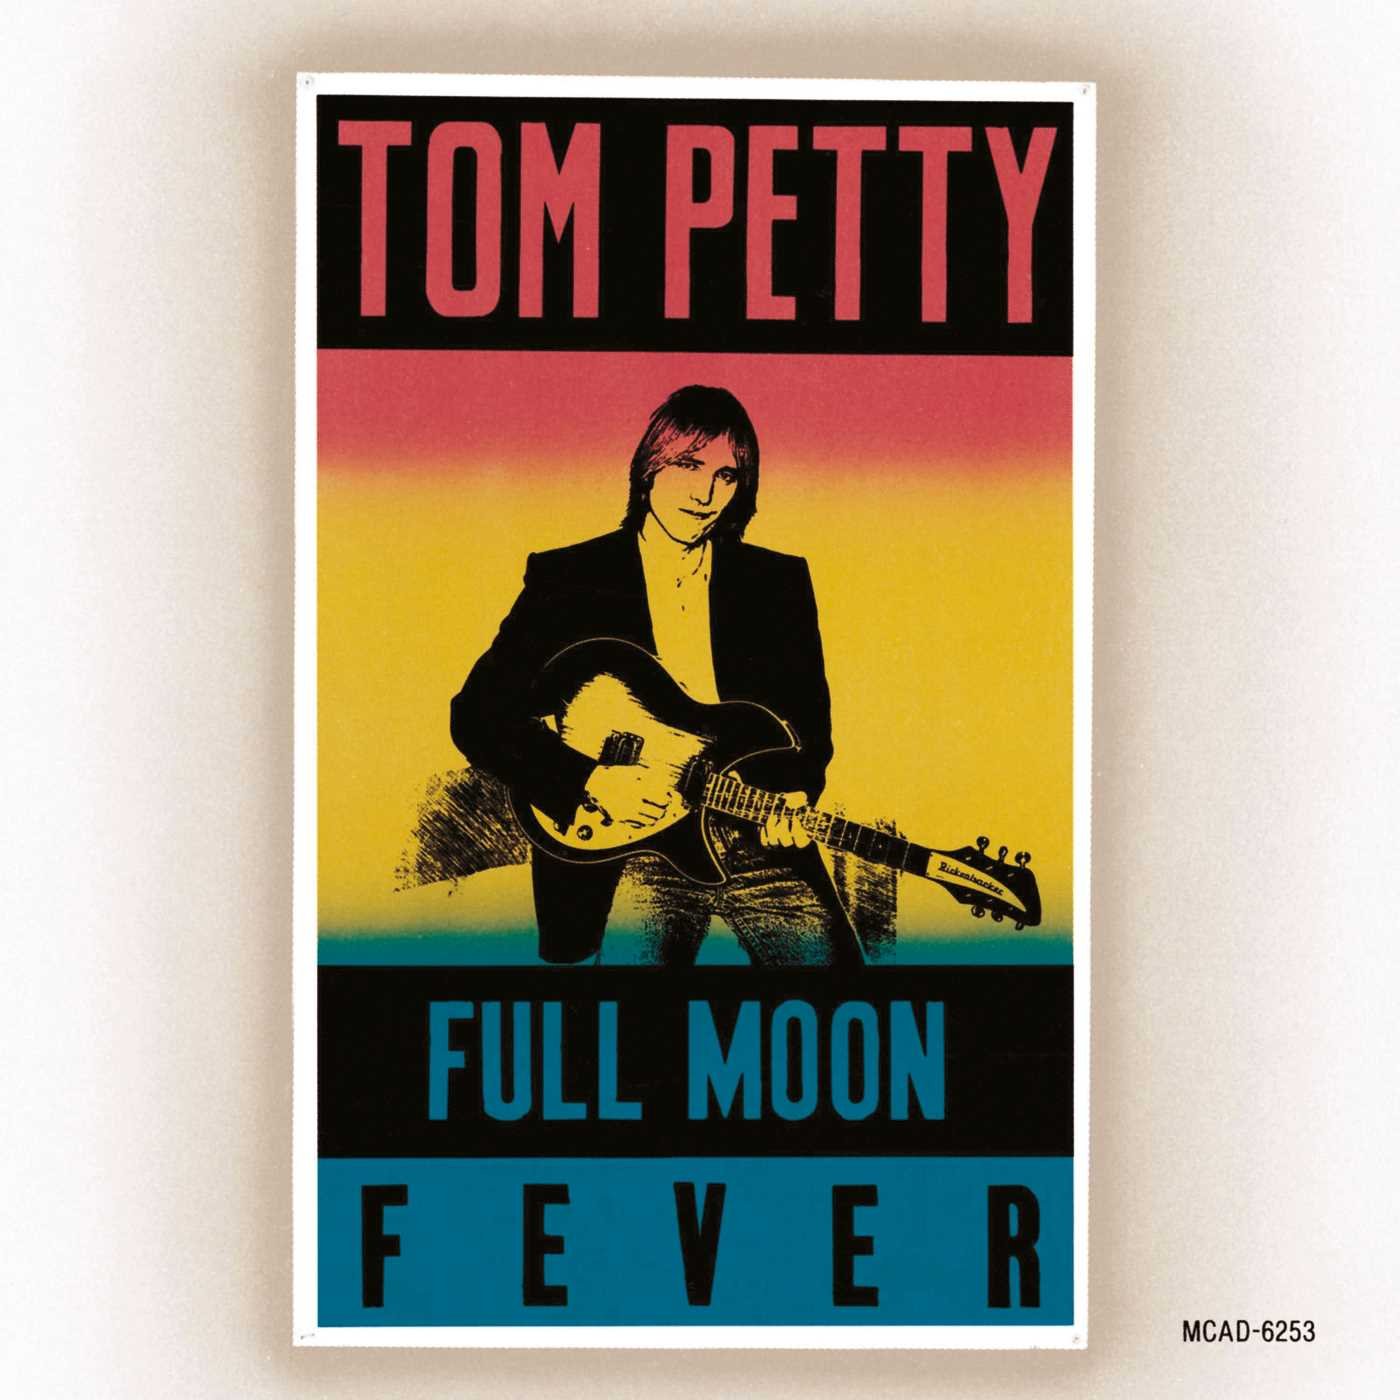 Tom Petty & the Heartbreakers Album Reviews